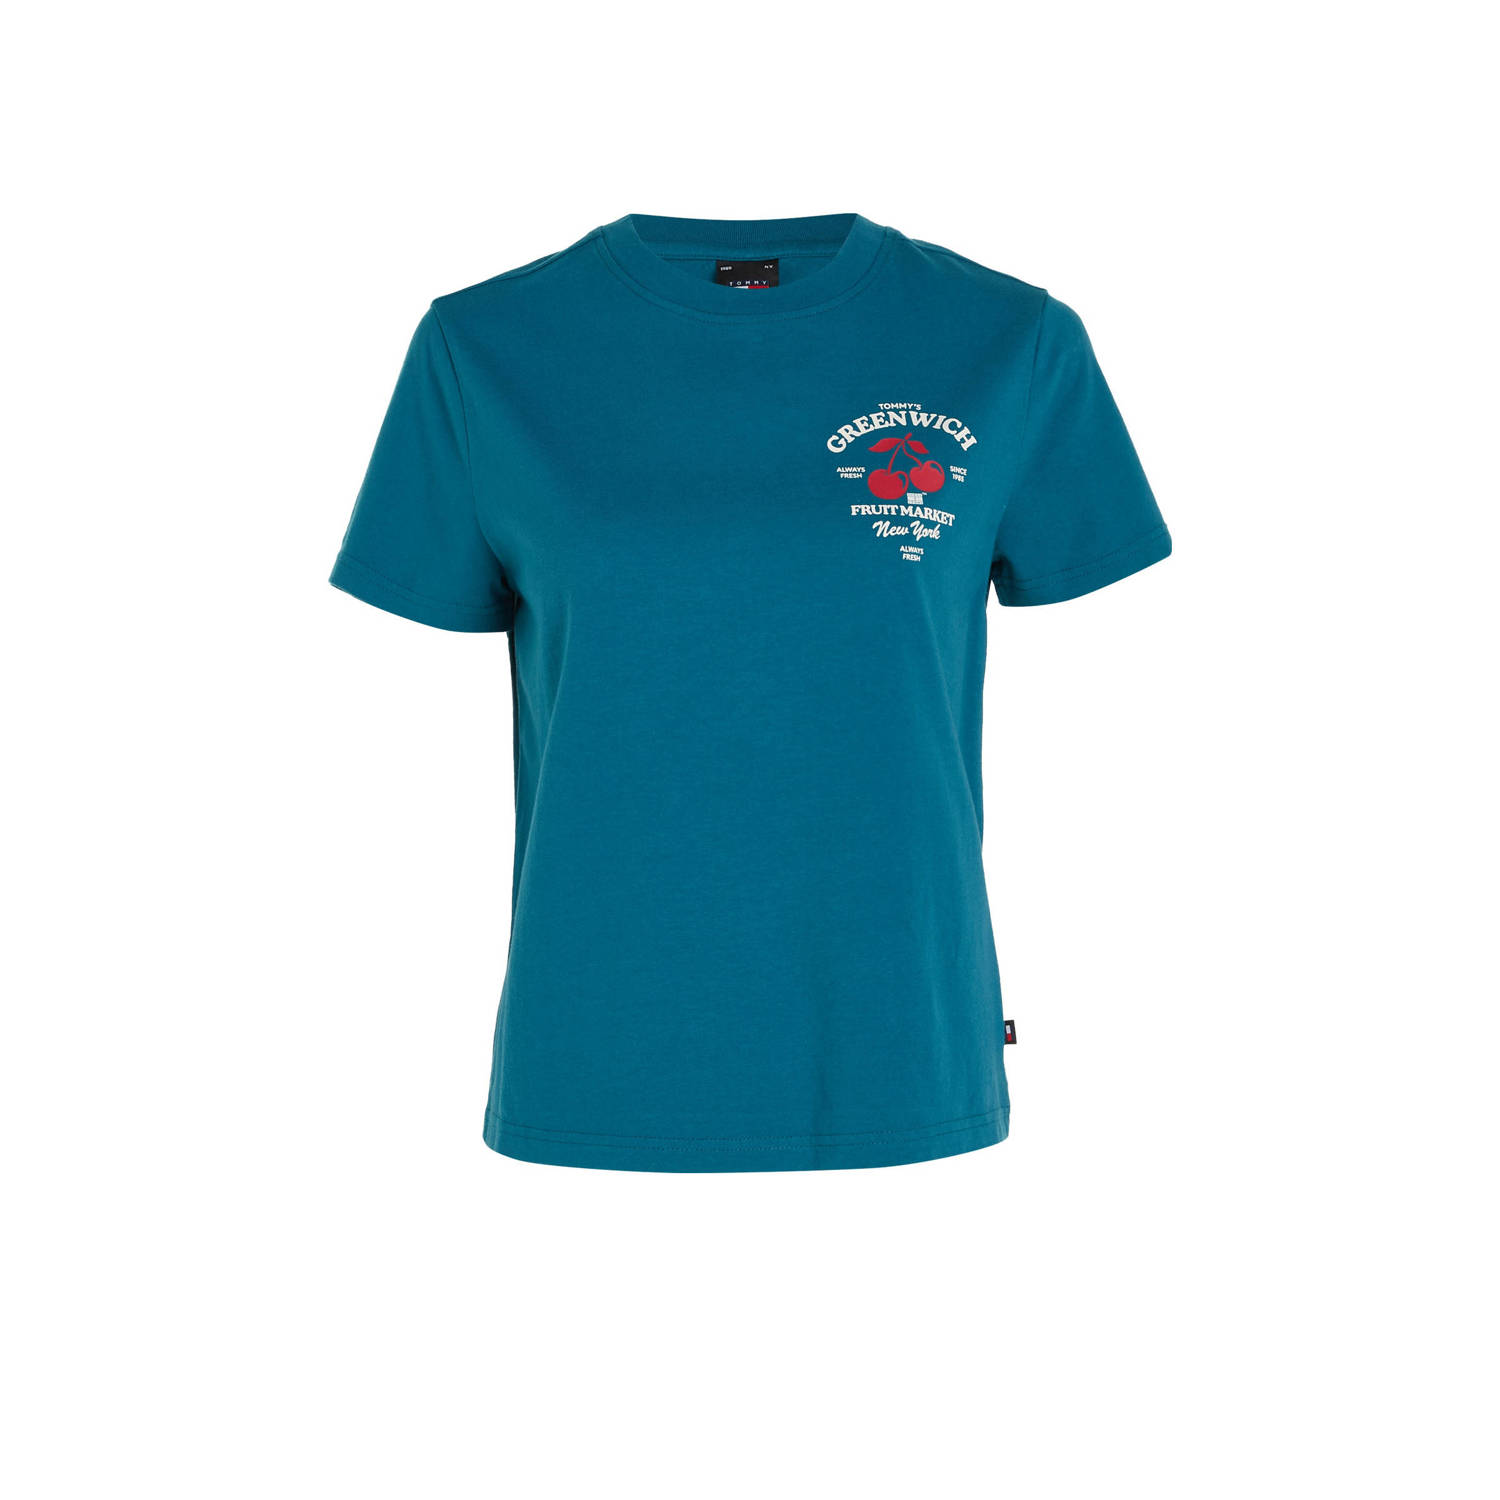 Tommy Jeans T-shirt met printopdruk blauw wit rood